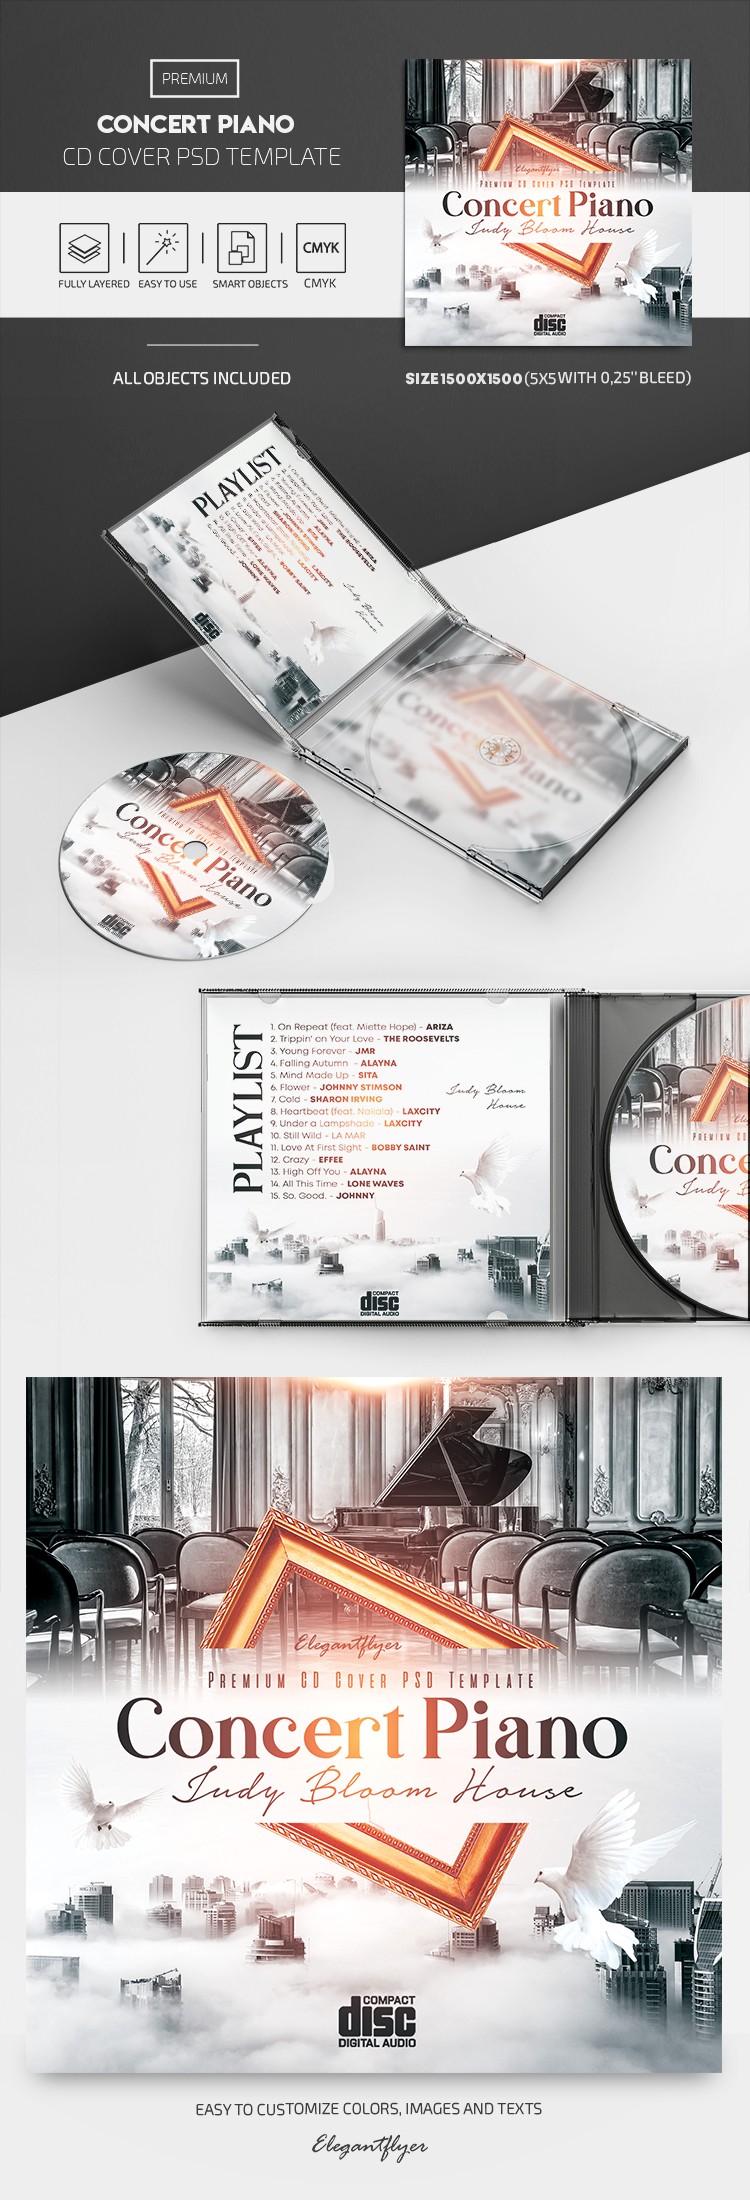 Konzertpiano-CD-Cover by ElegantFlyer